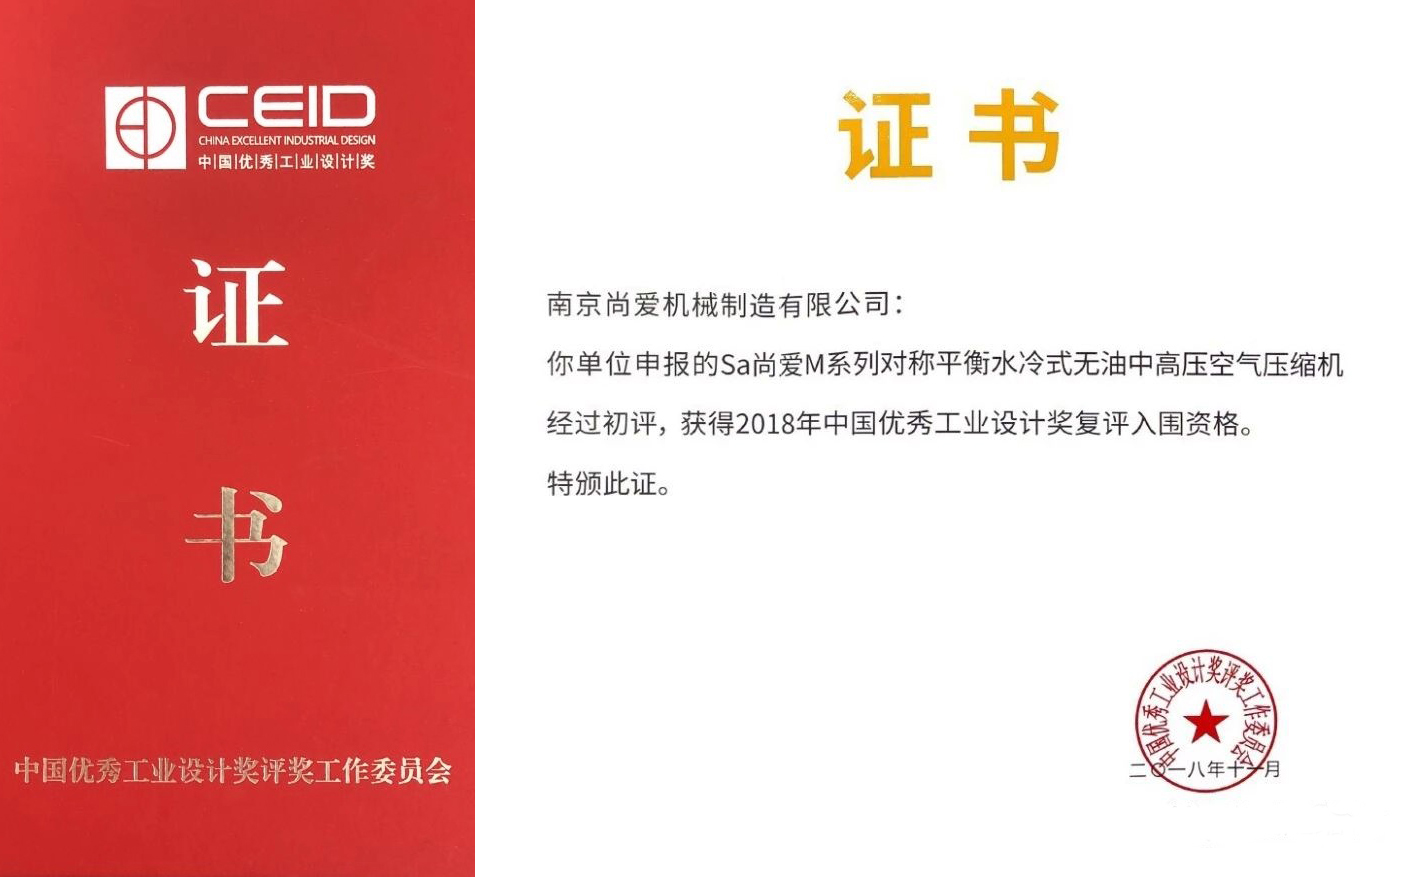 Nanjing Shangair won China Industrial Design Finalist Award